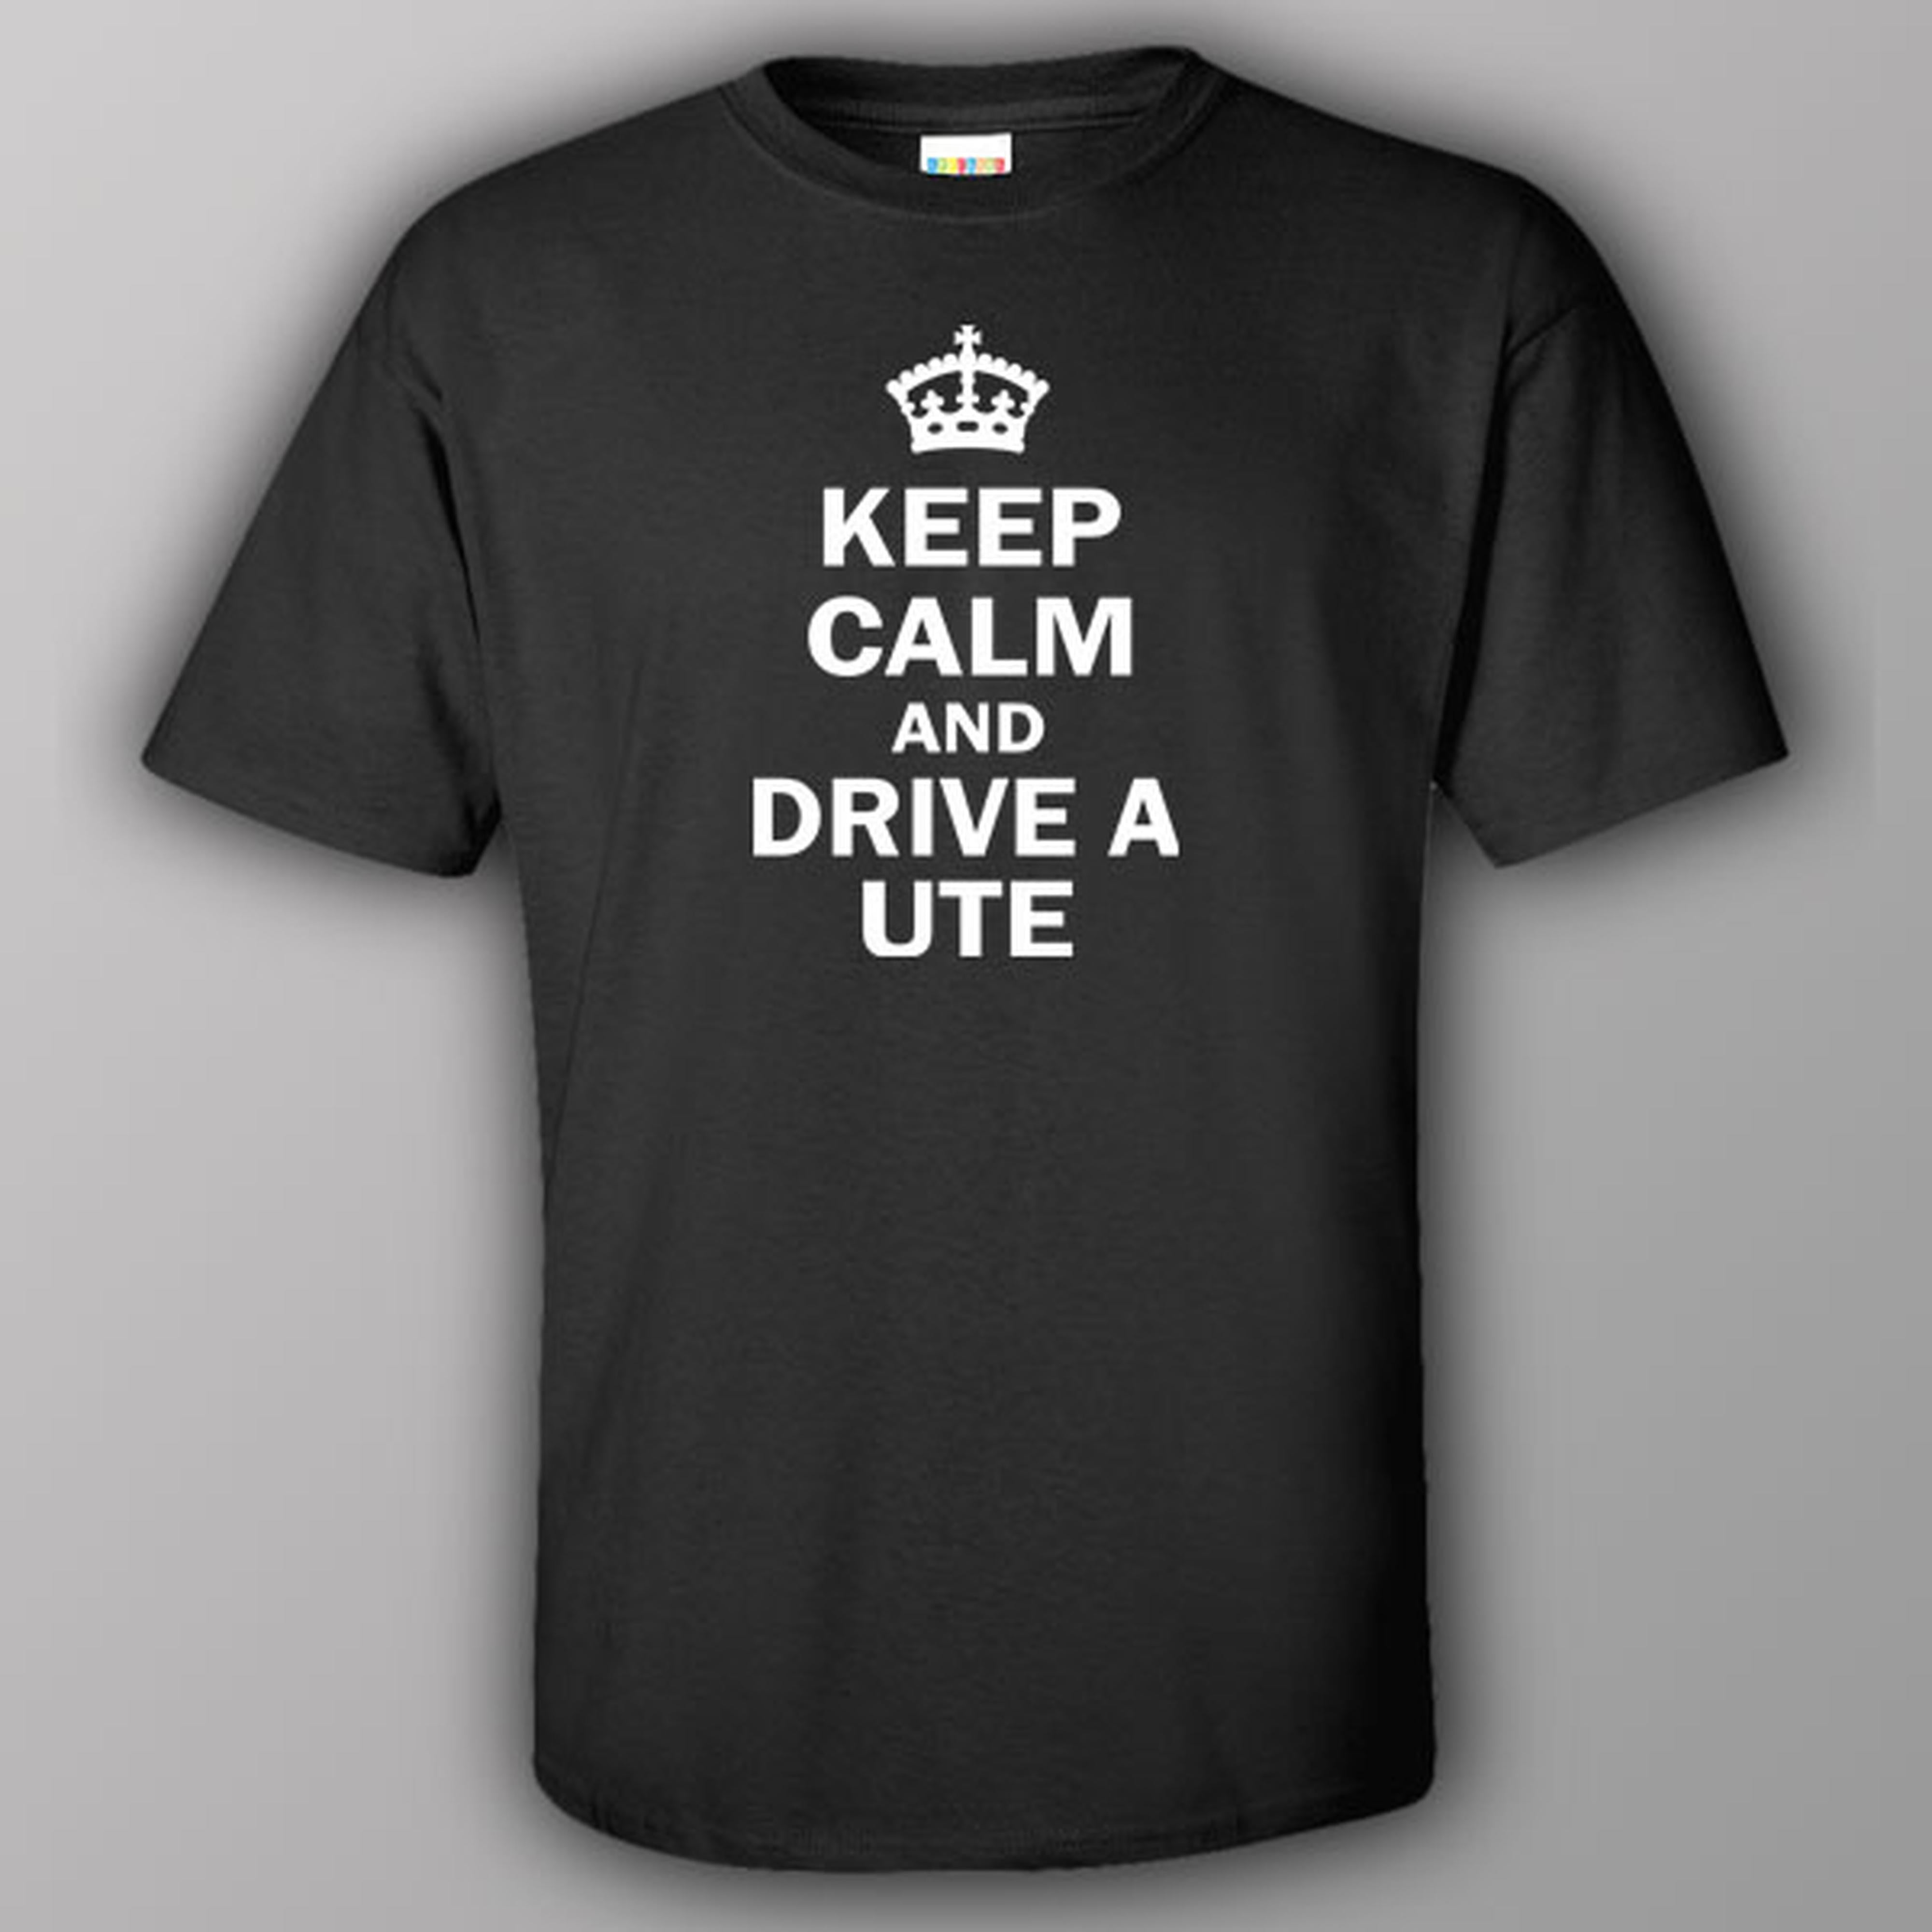 Keep calm and drive a Ute - T-shirt